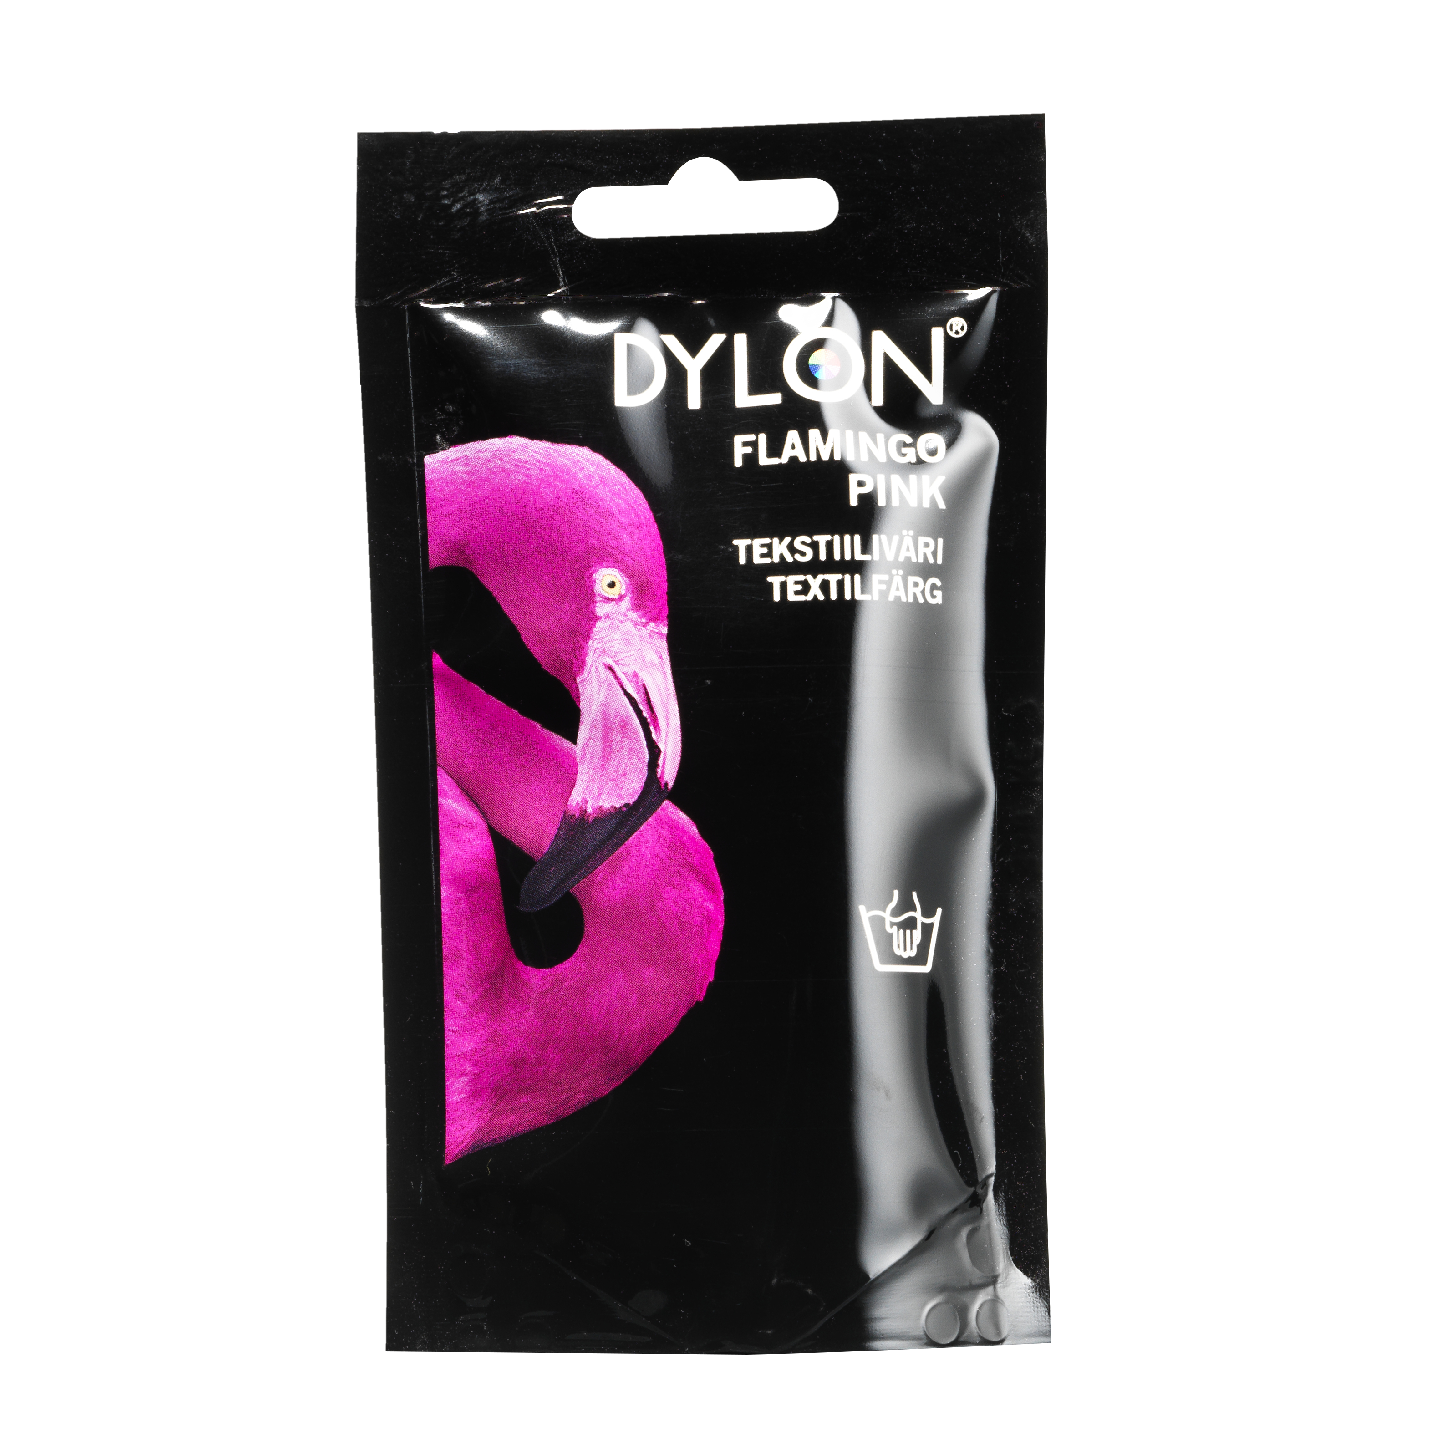 Dylon 50g Flamingo Pink 29 tekstiiliväri käsinpesu